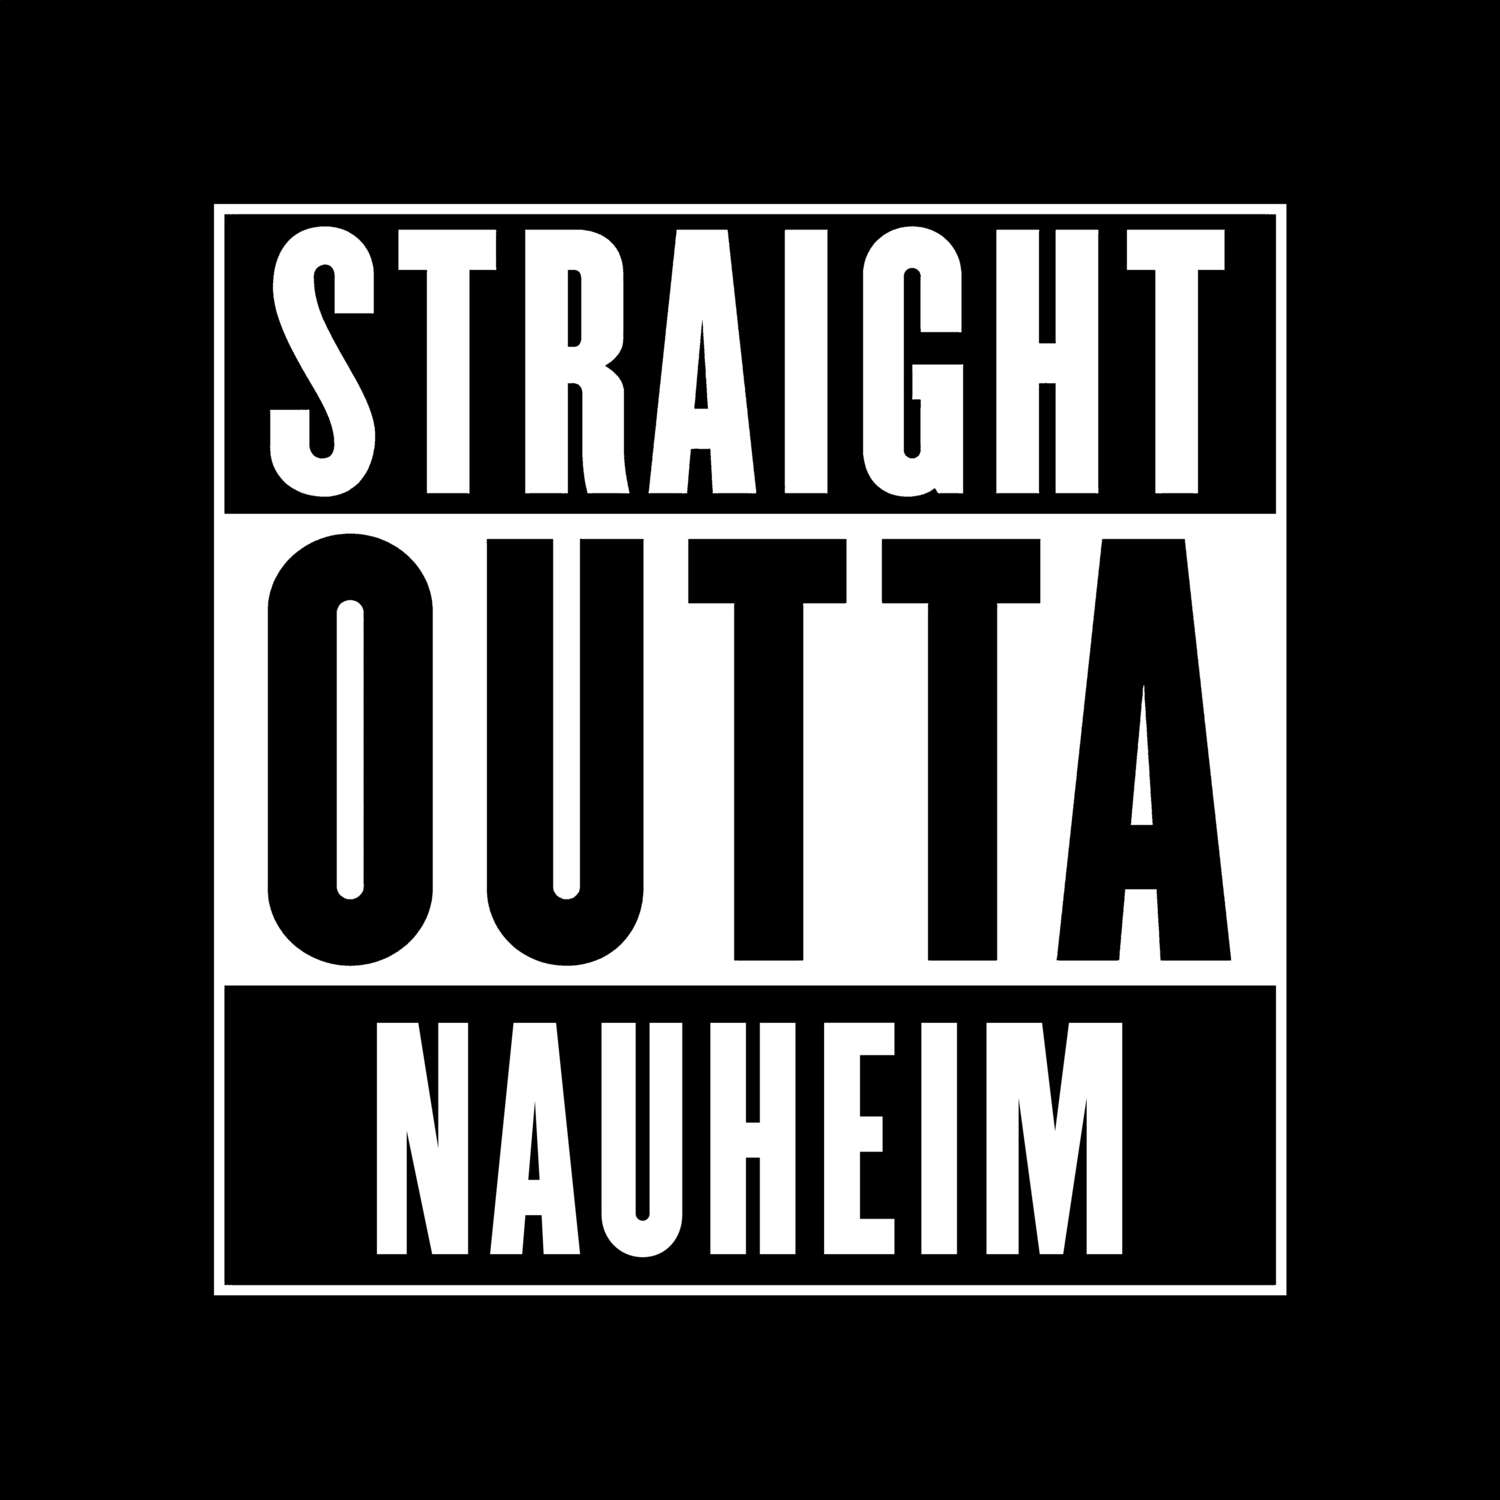 Nauheim T-Shirt »Straight Outta«